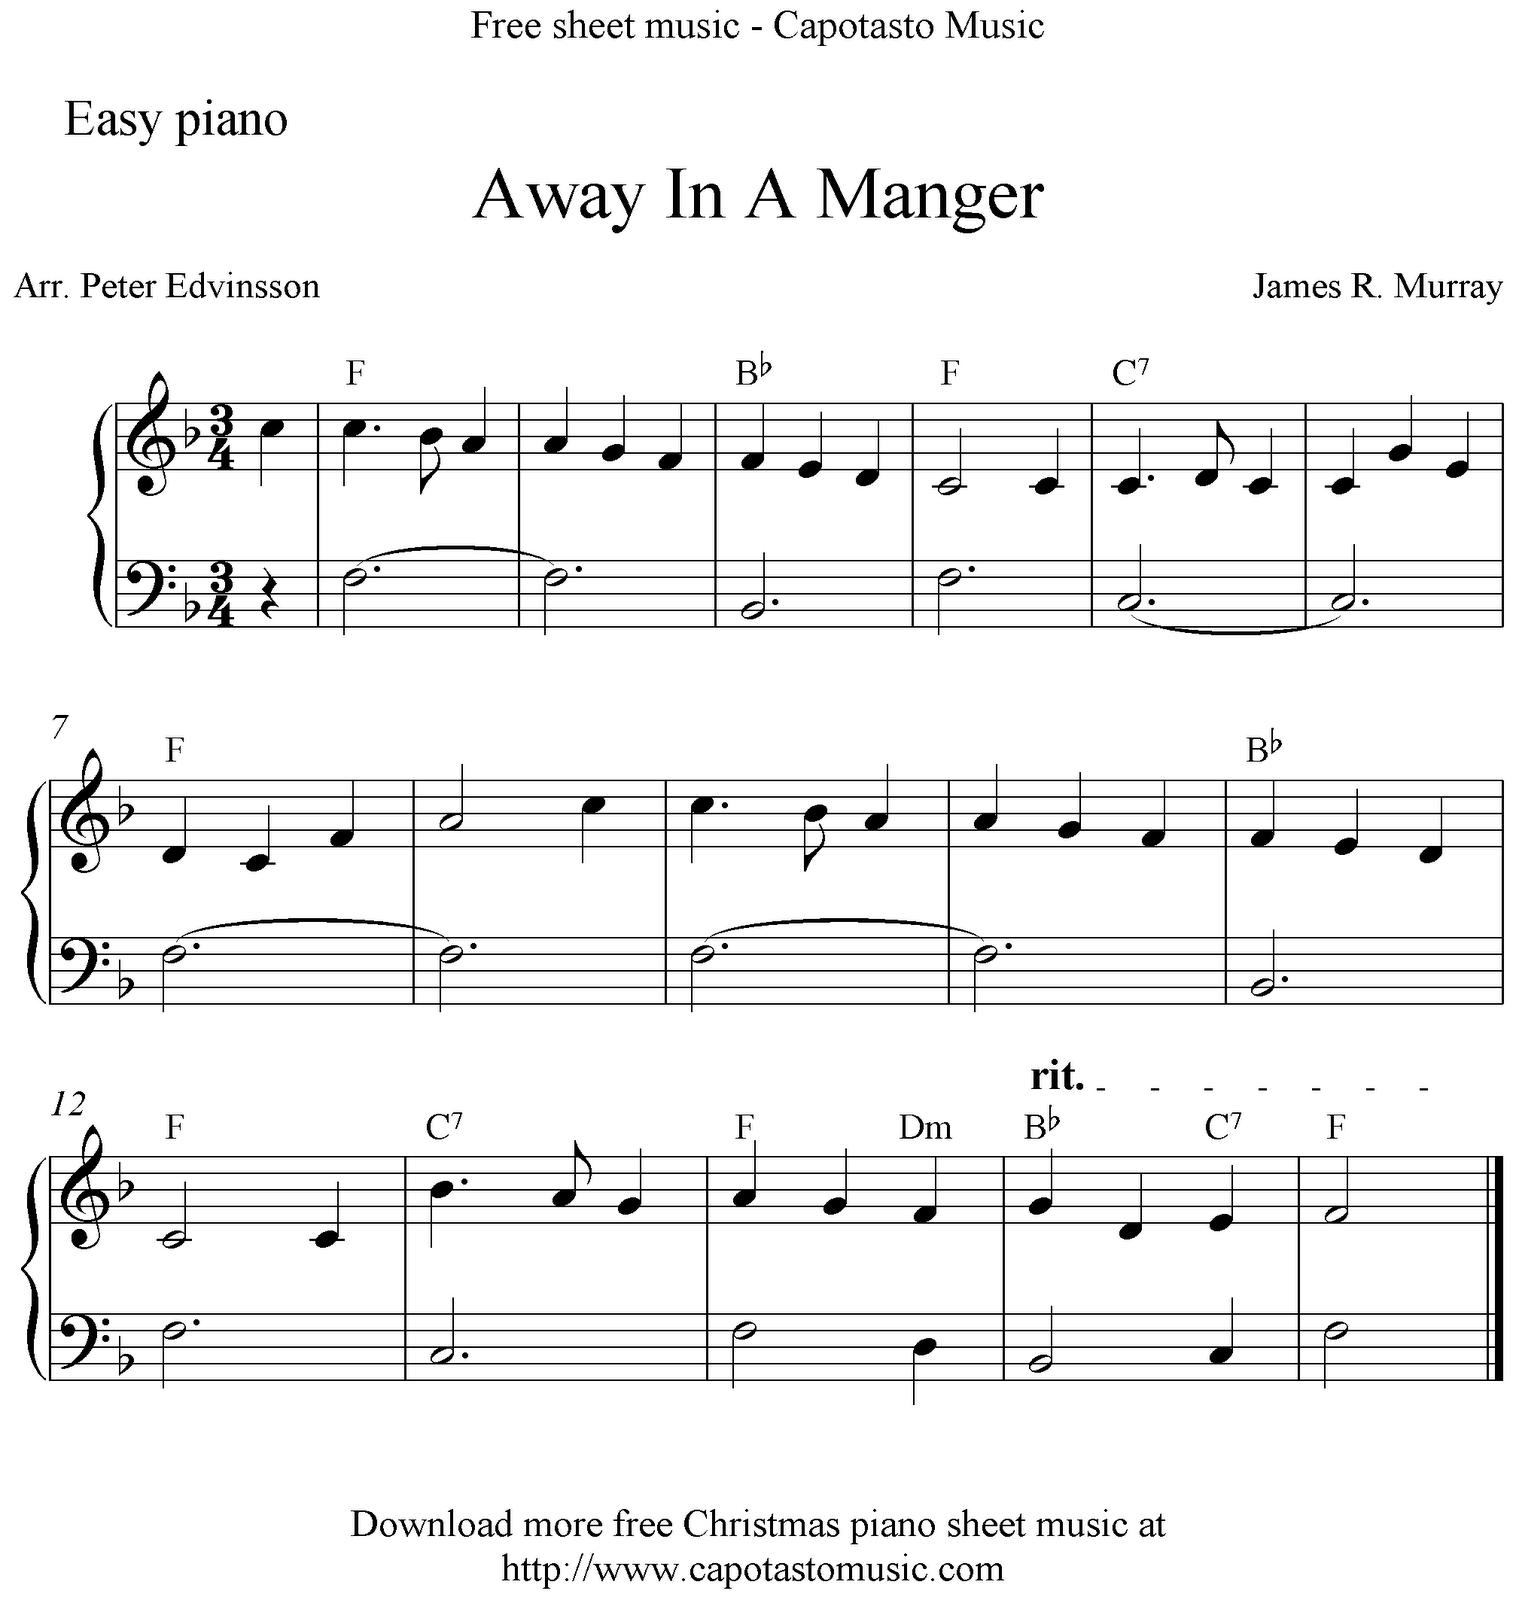 Free Printable Sheet Music Easy Free Christmas Piano Sheet Music Away In A Manger